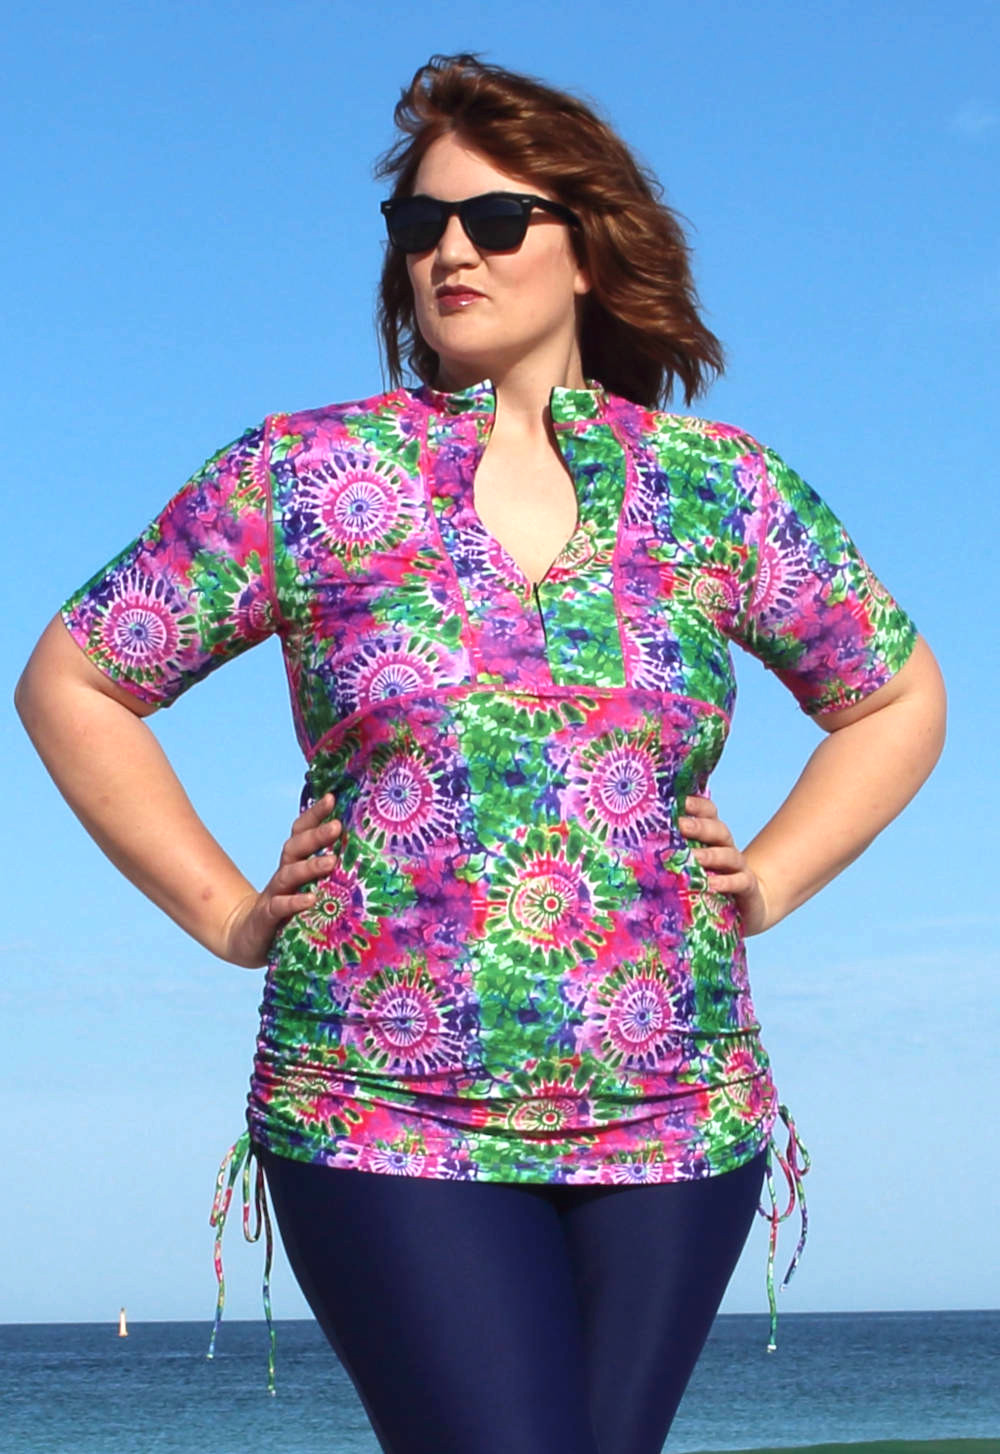 http://oceanroadswimwear.com.au/wp-content/uploads/2019/10/womens-plus-size-short-sleeve-adjustable-swim-shirts-colourful-pink-green-patterned.jpg